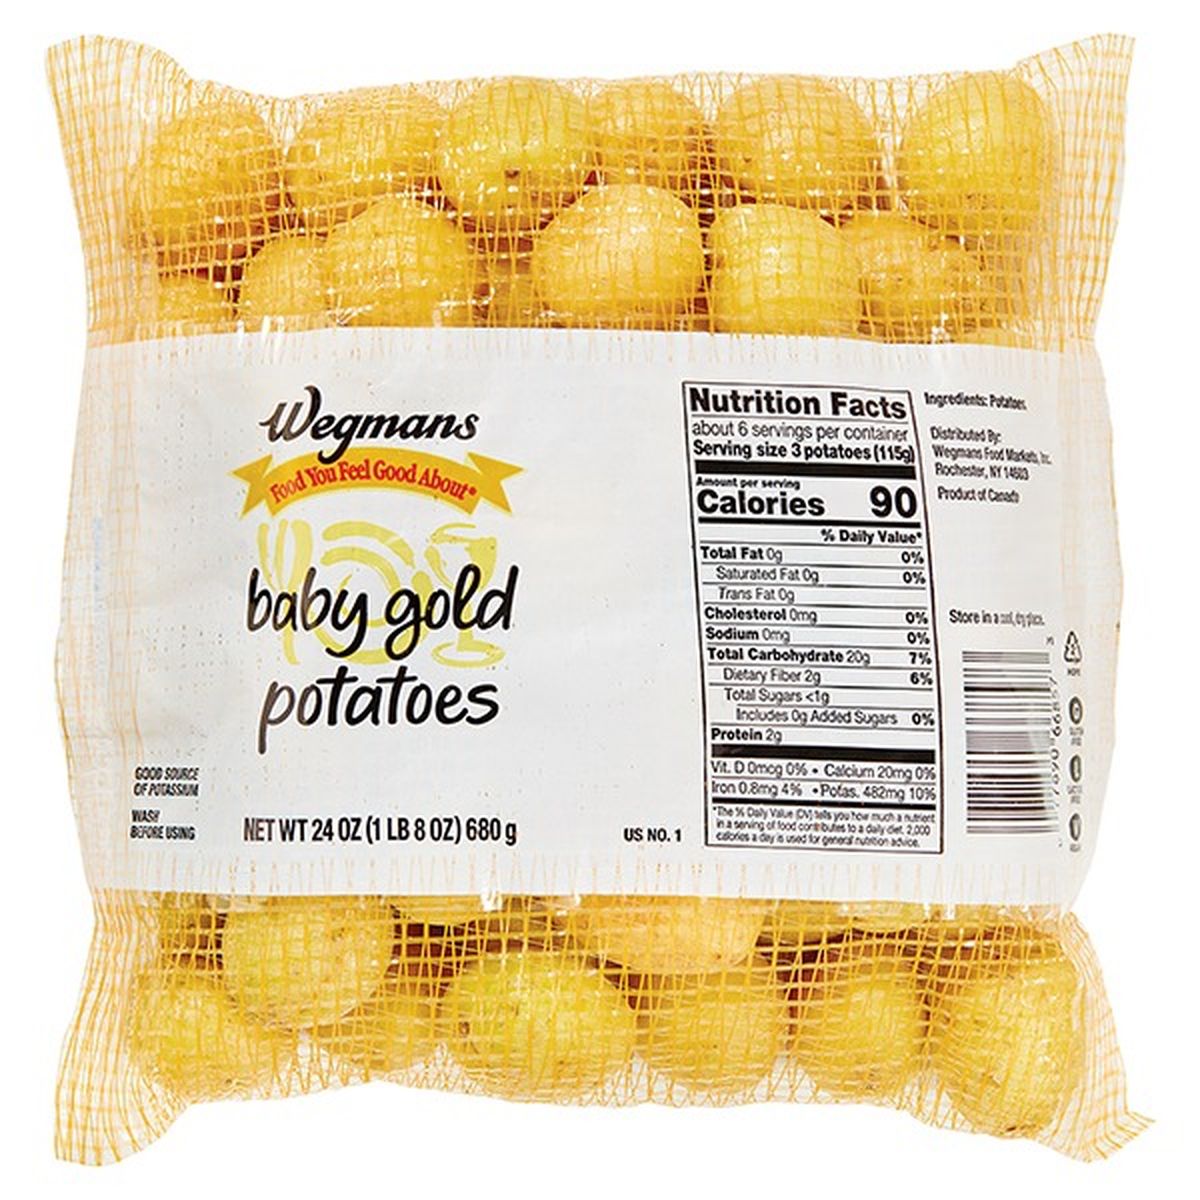 Calories in Wegmans Baby Gold Potatoes